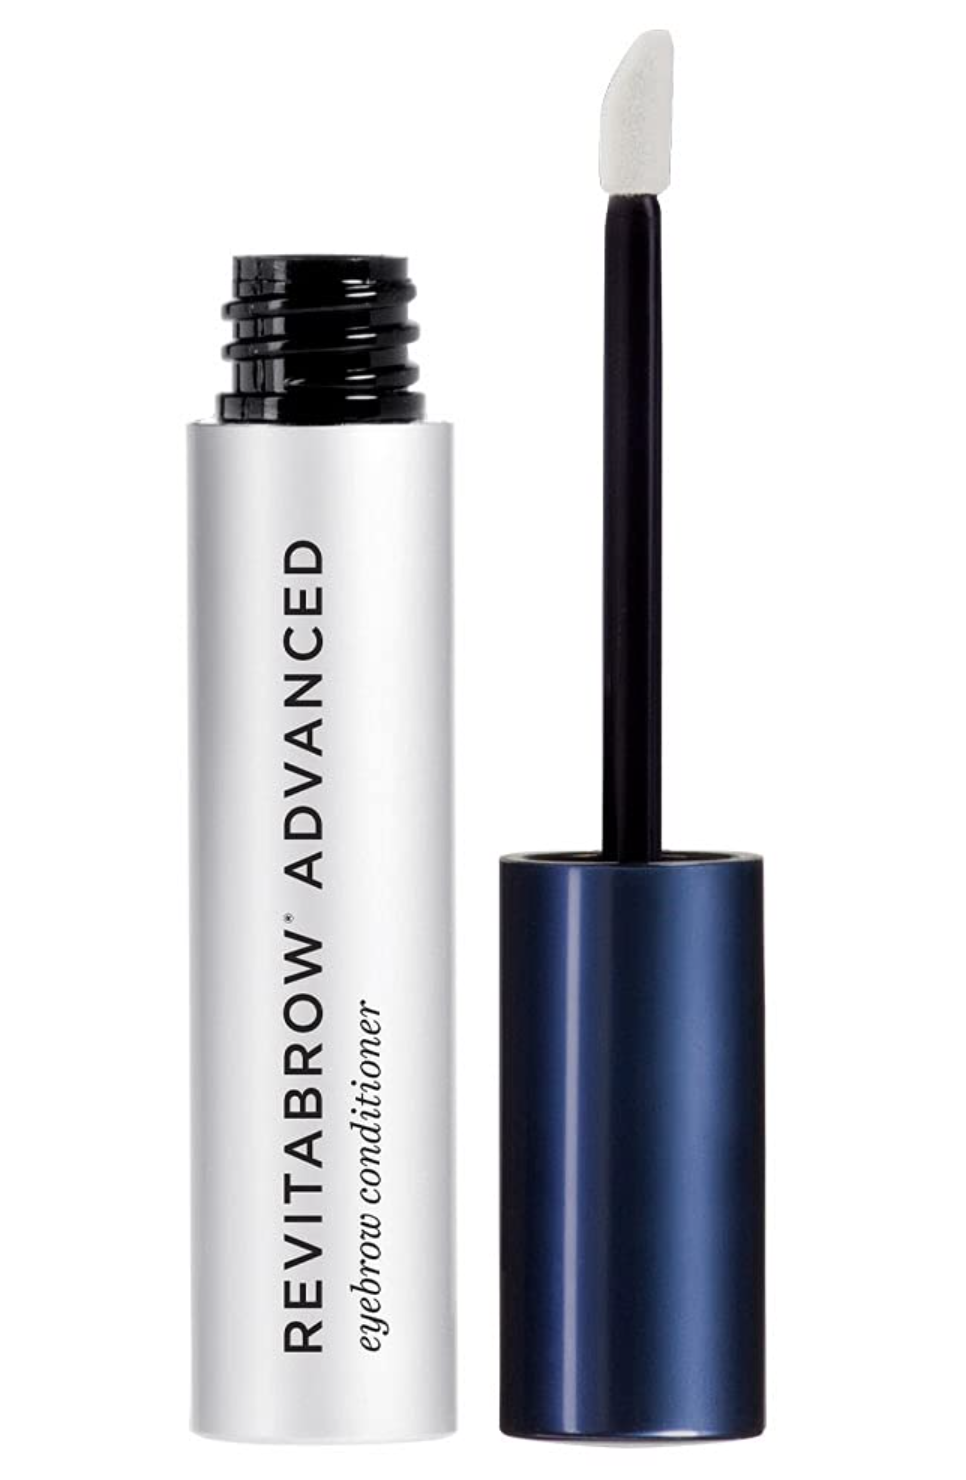 RevitaBrow Advanced Eyebrow Conditioner Serum (2 Sizes)